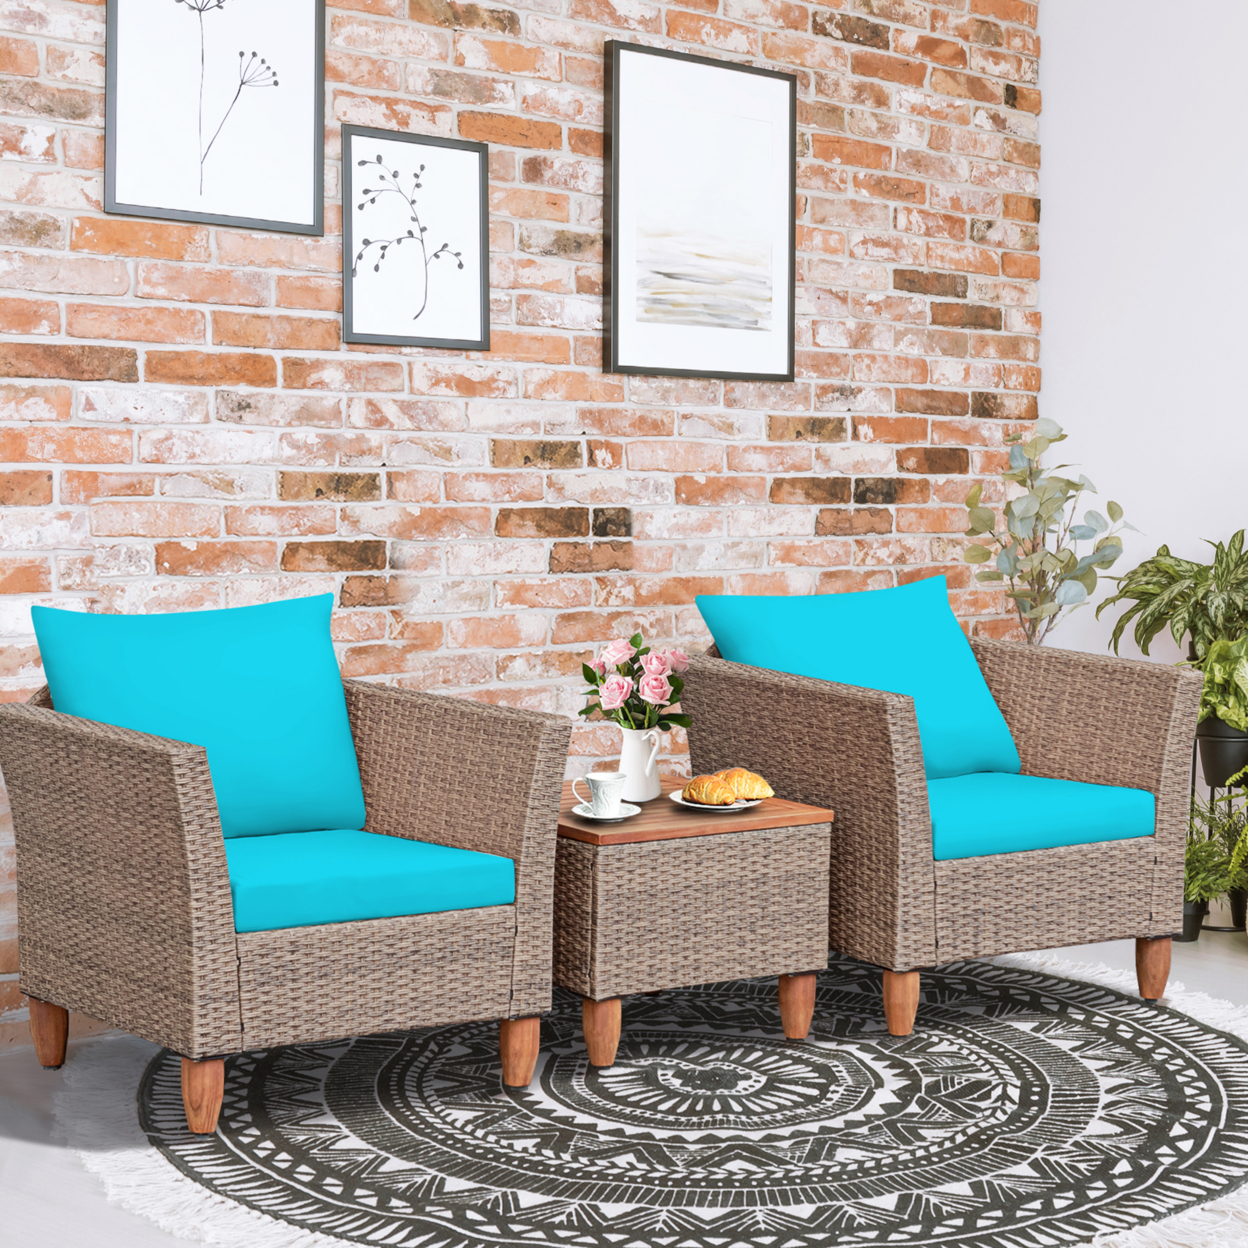 3PCS Rattan Patio Conversation Furniture Set W/ Wooden Feet Turquoise Cushions